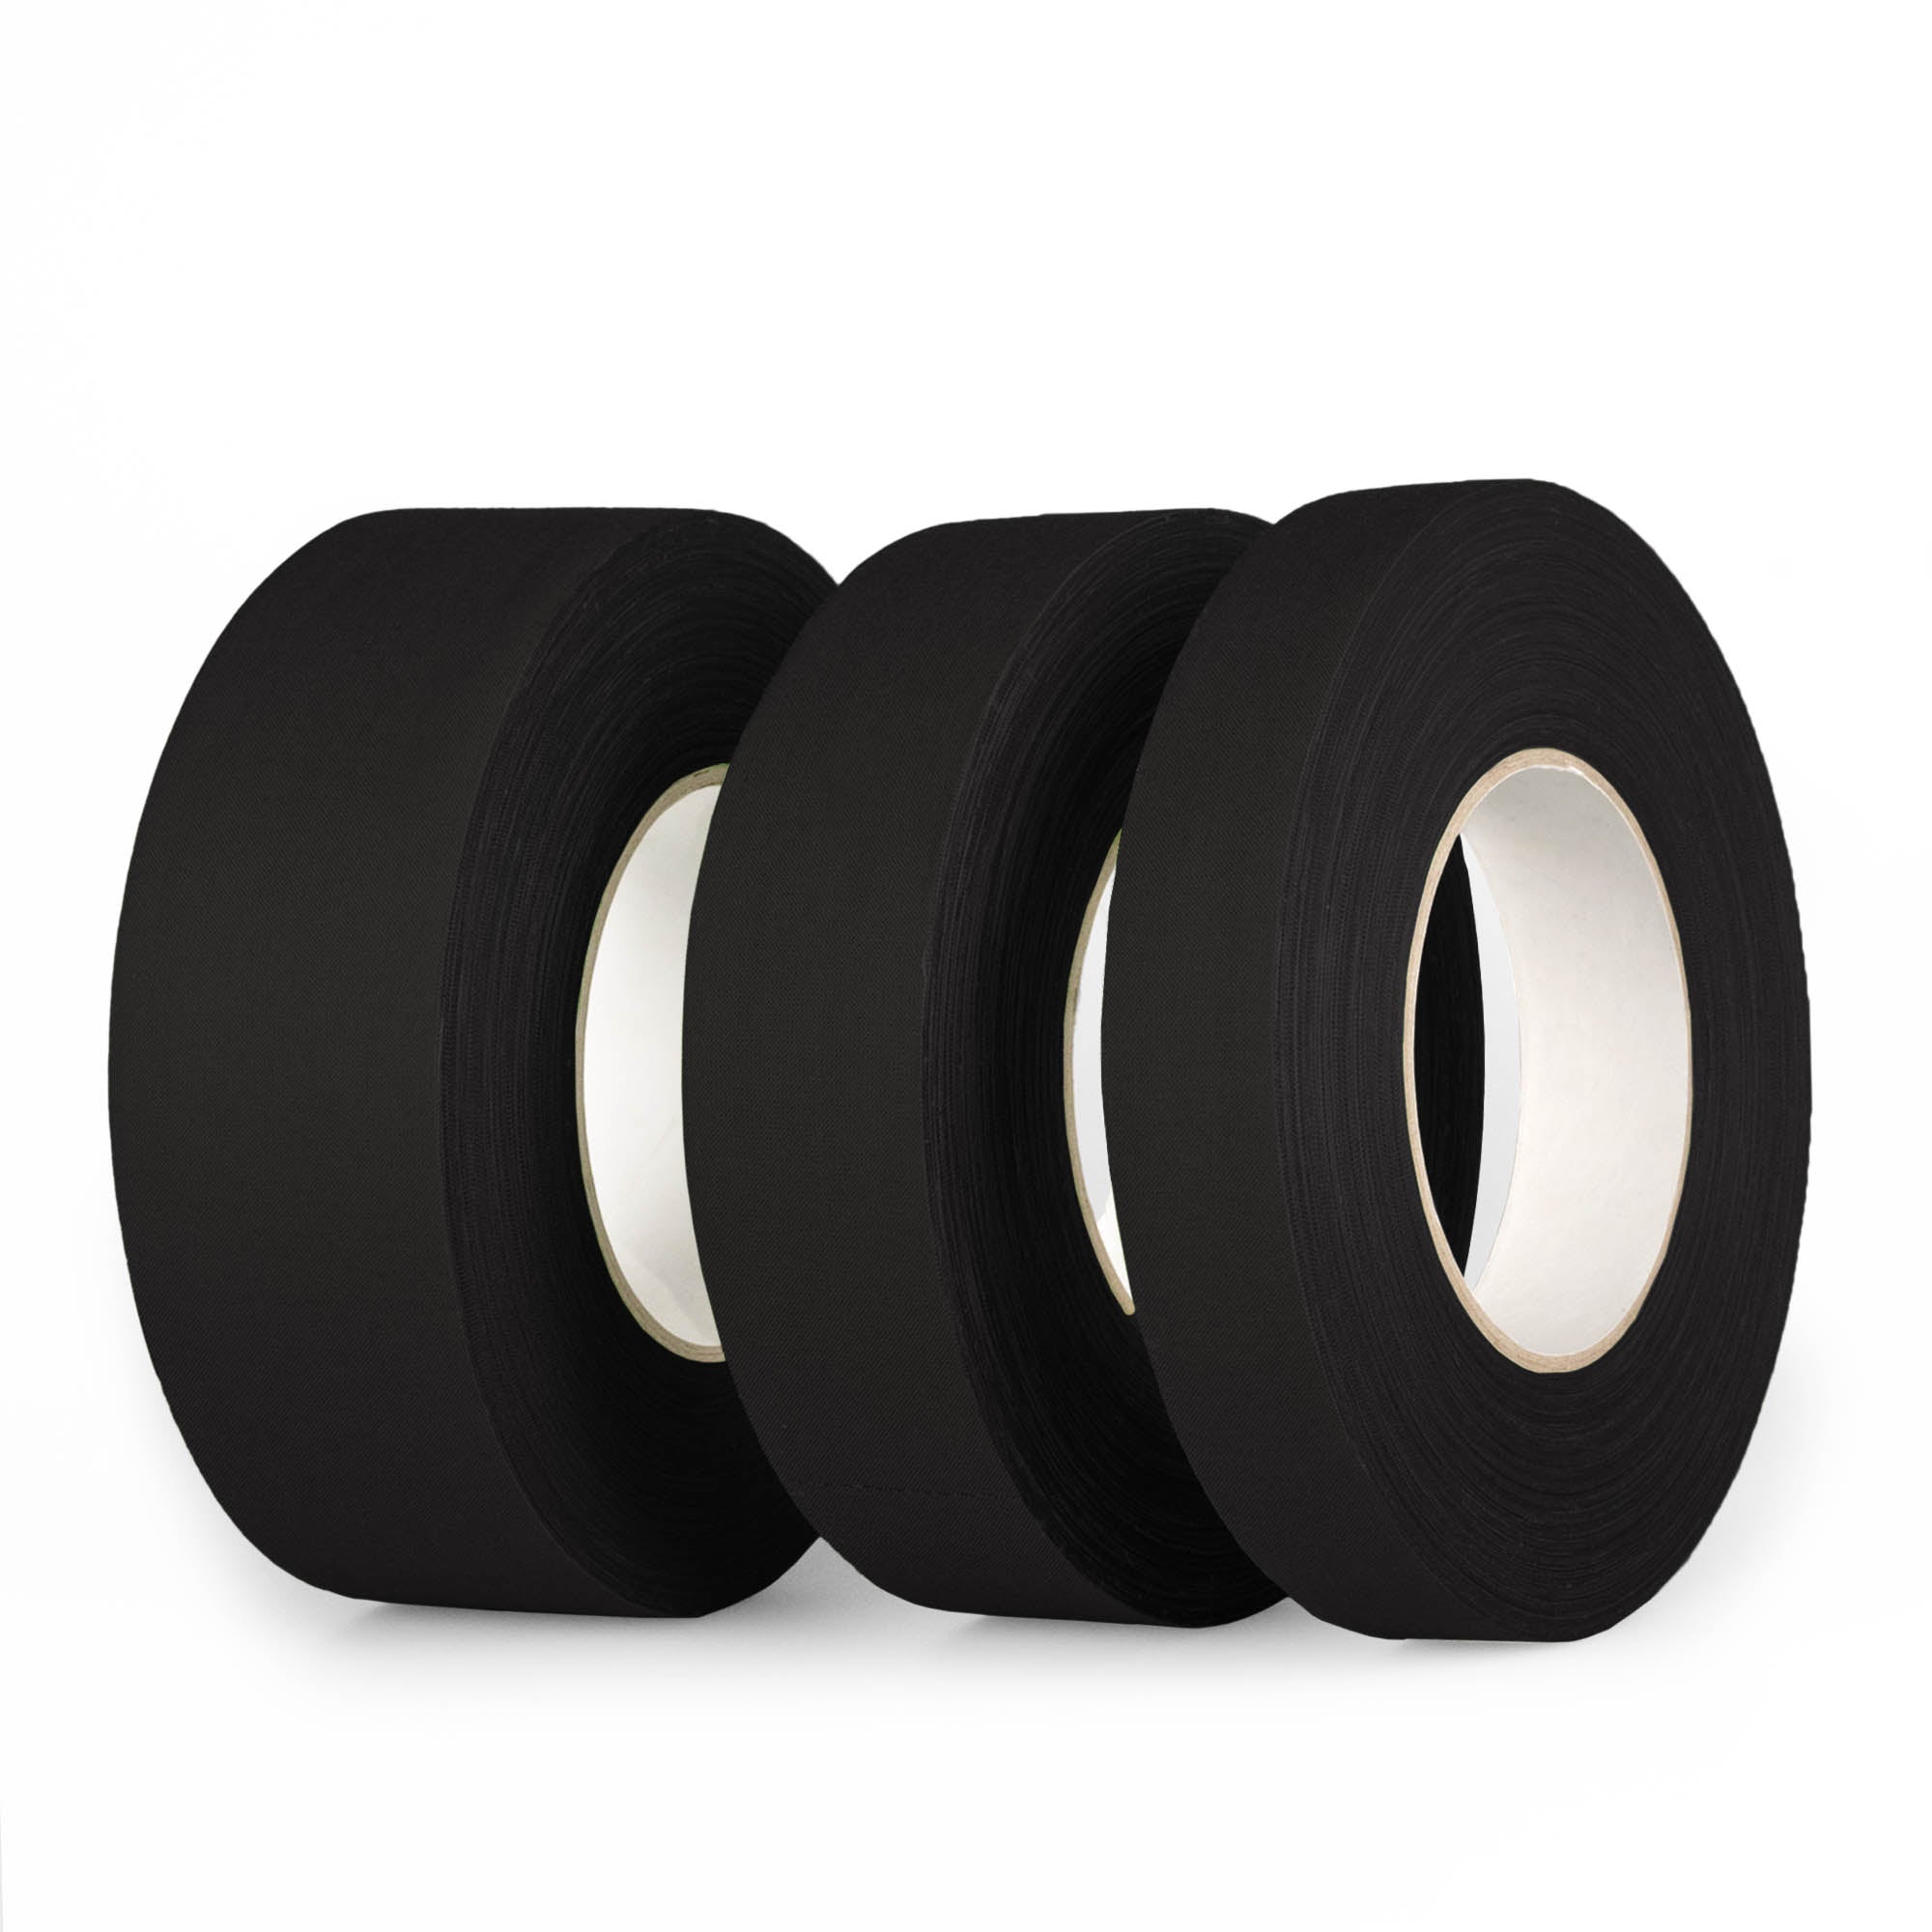 3 sizes of black tape